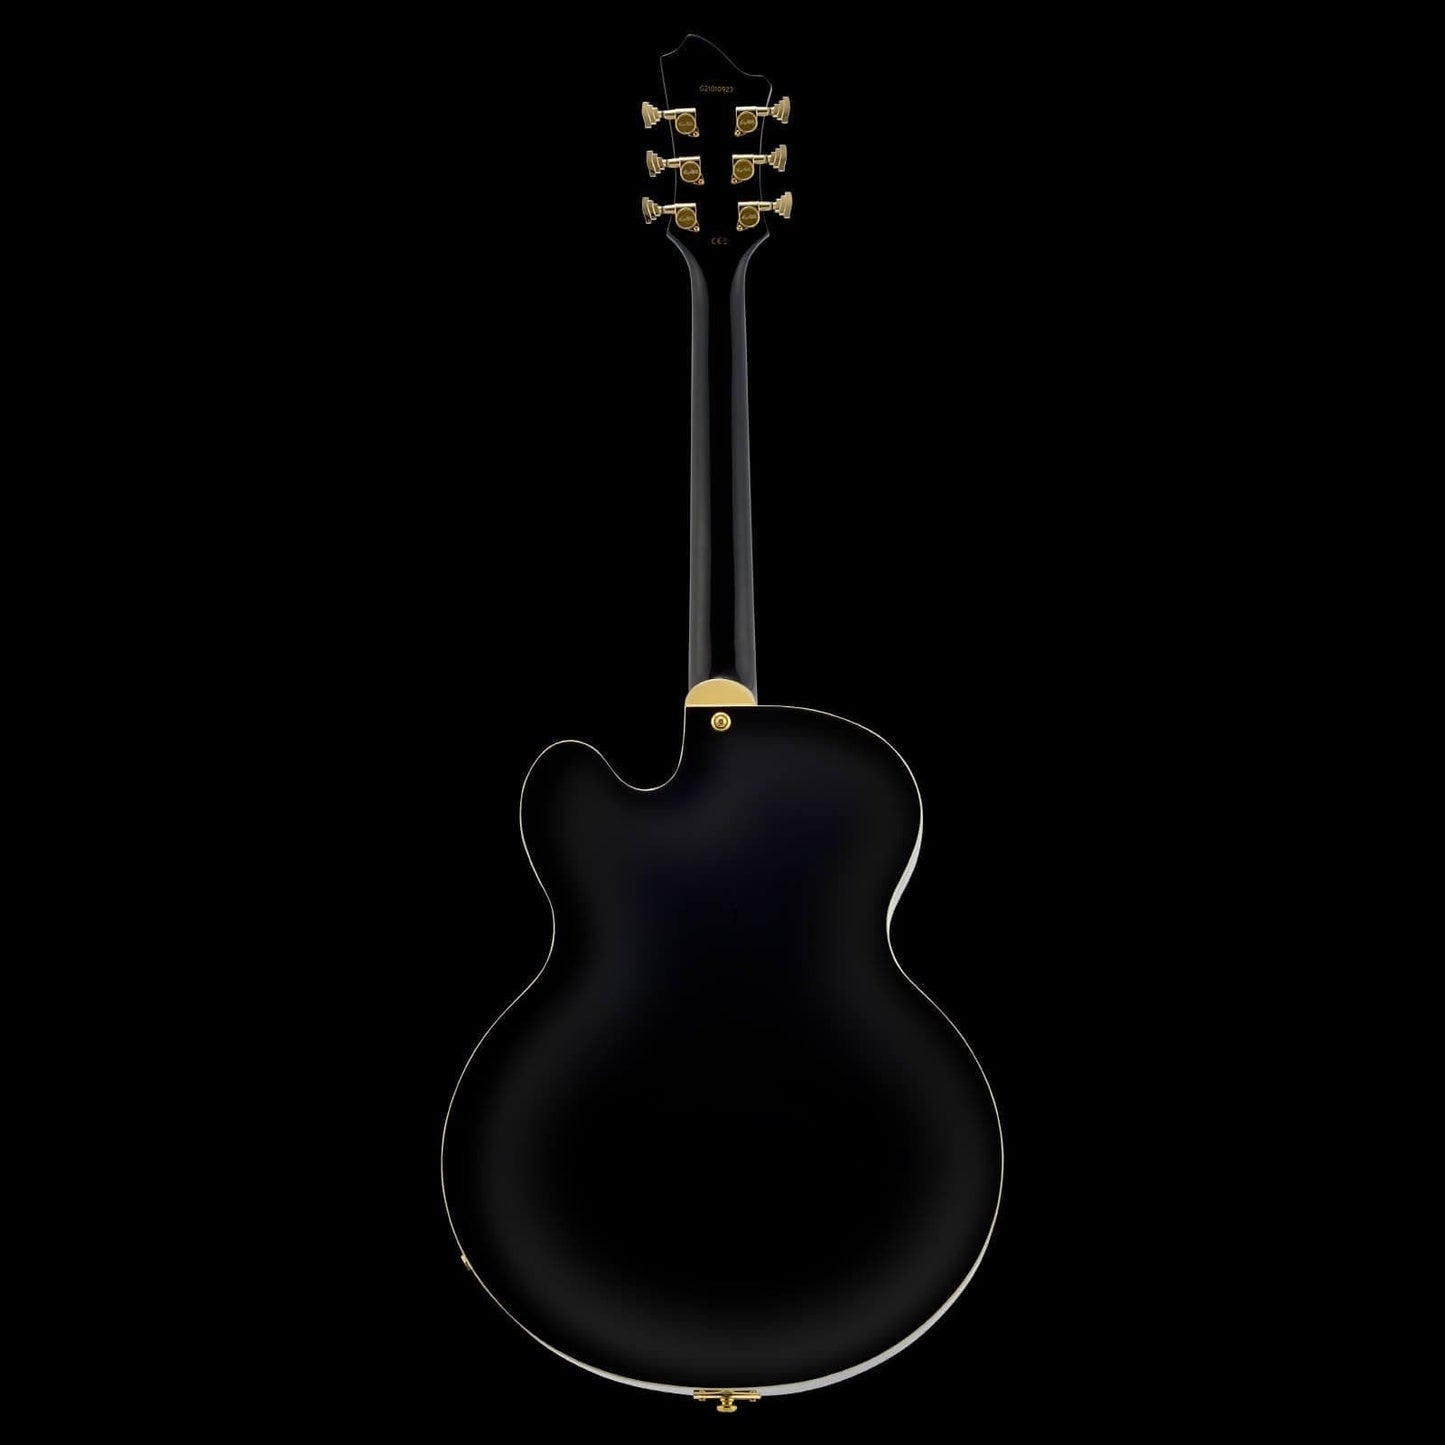 Hagstrom HJ500 Hollow Body Guitar in Black Gloss